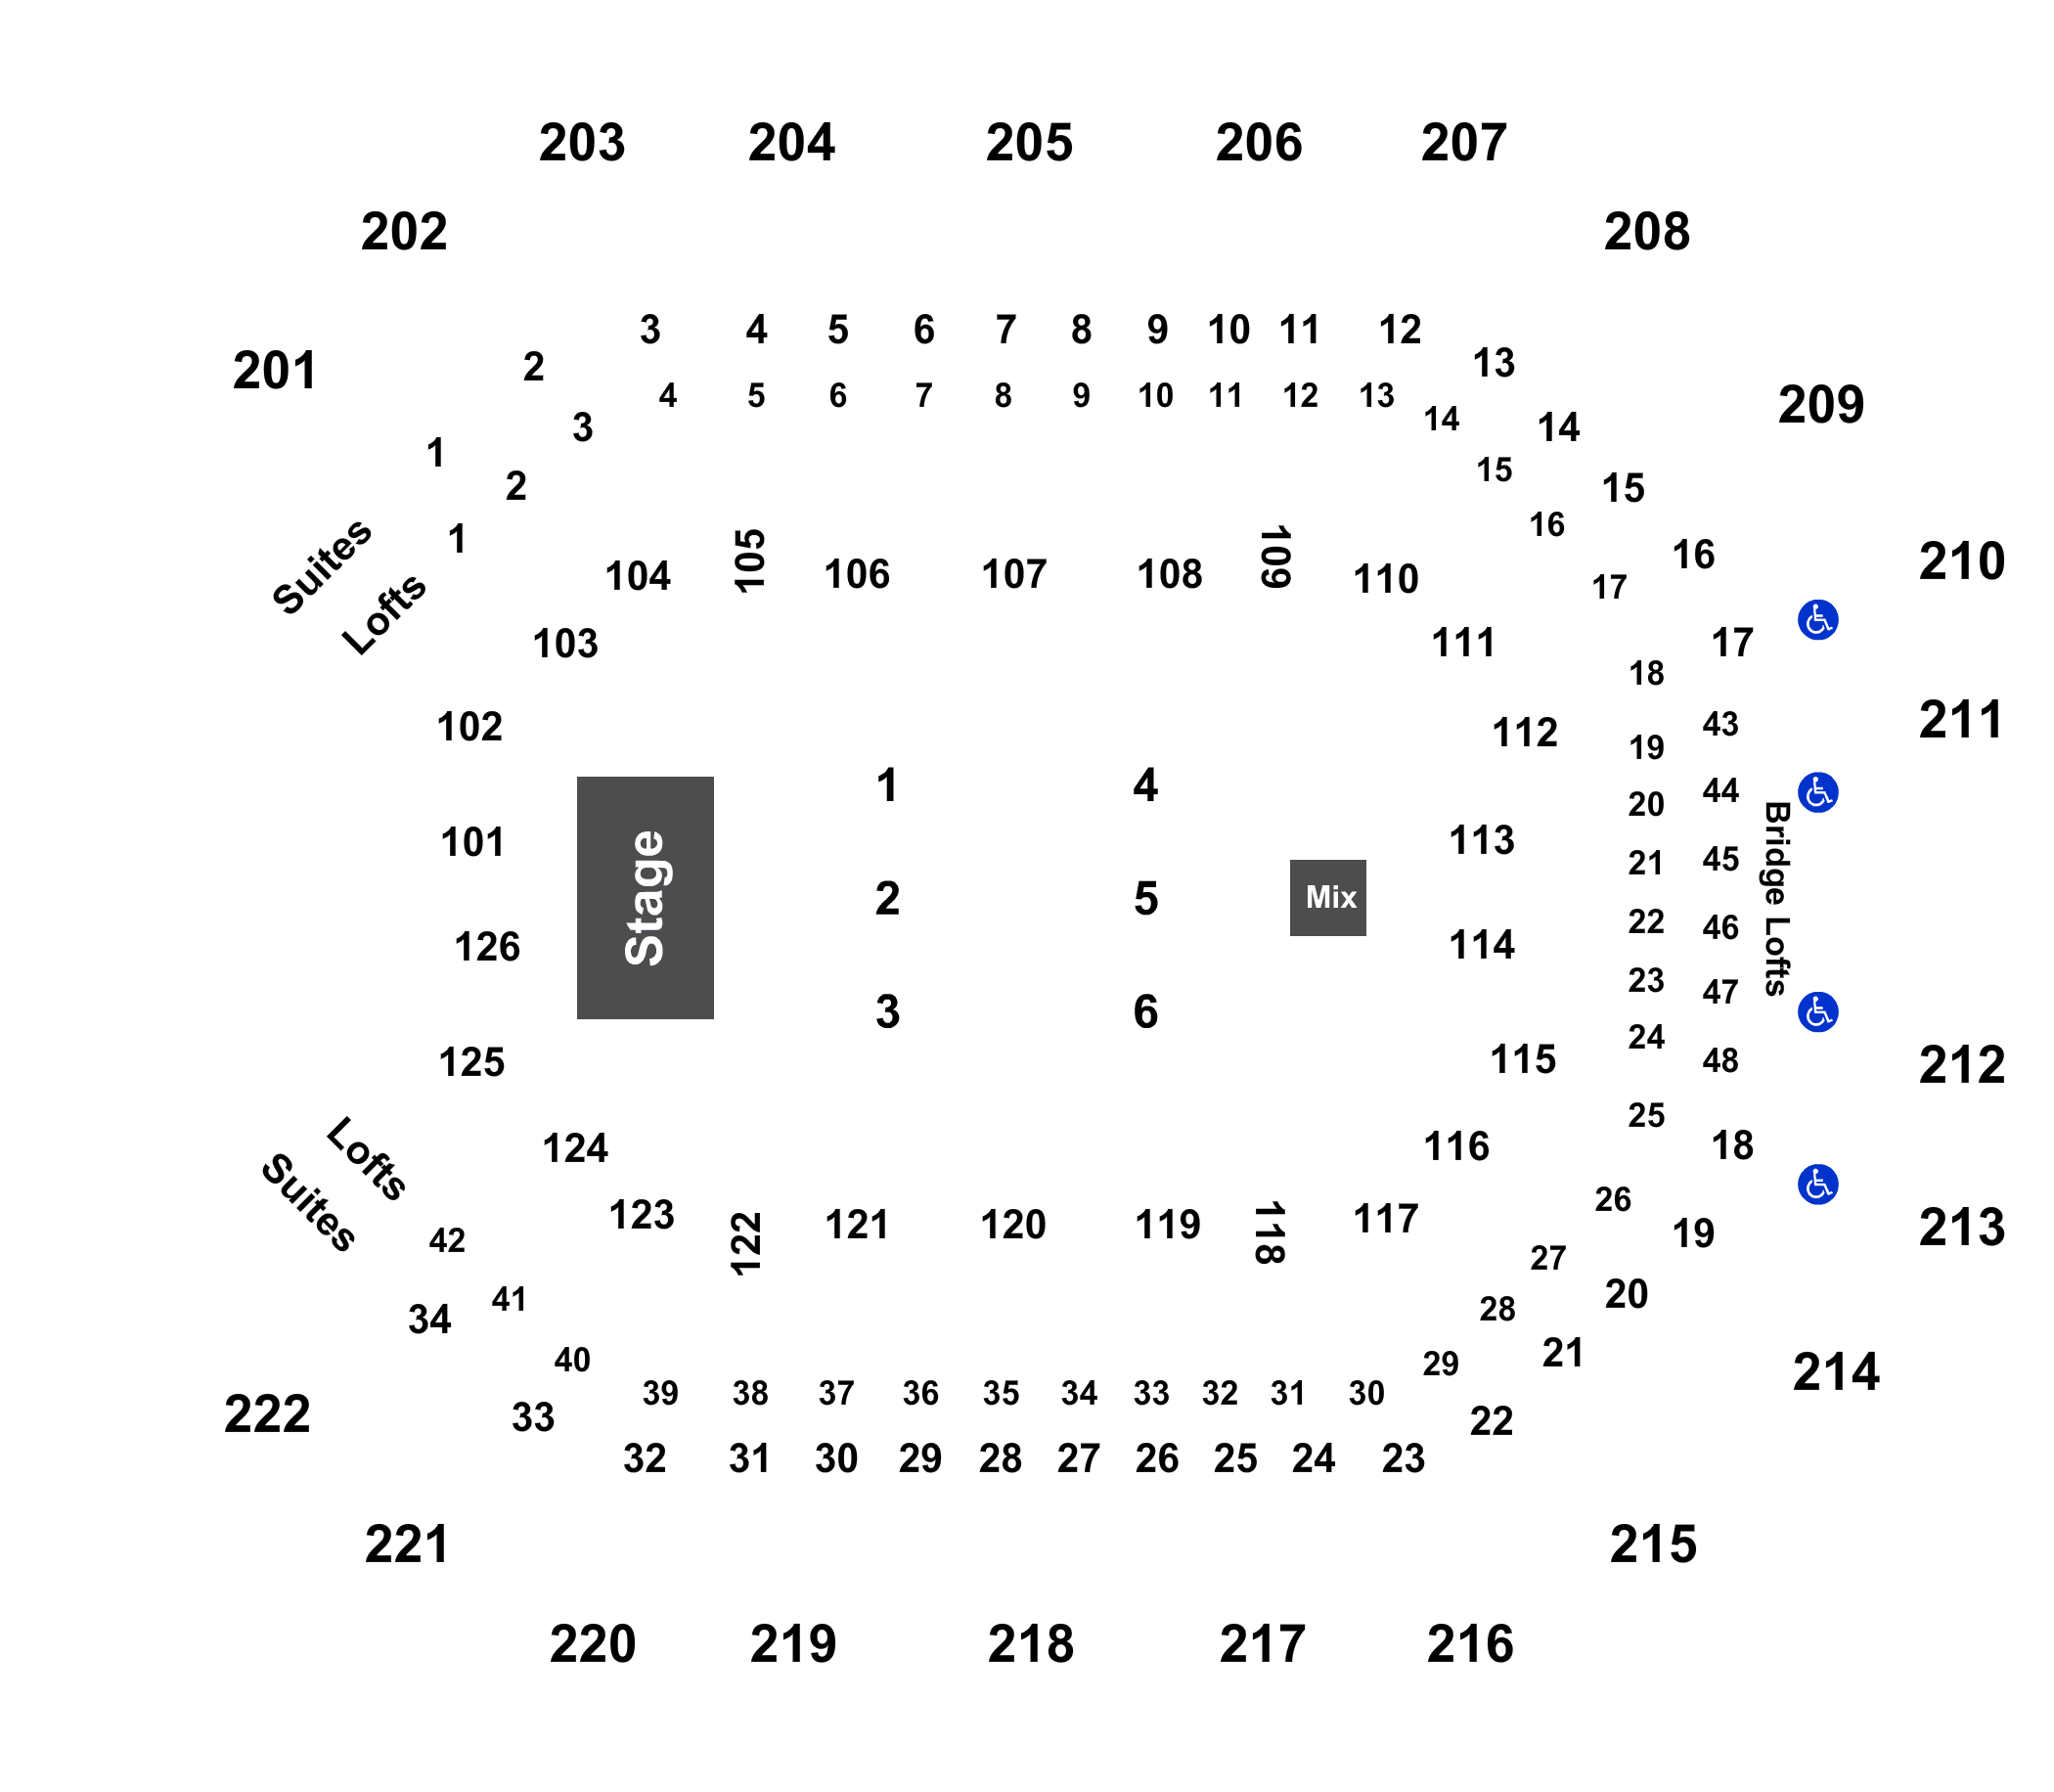 Golden 1 Center, Sacramento CA - Seating Chart View